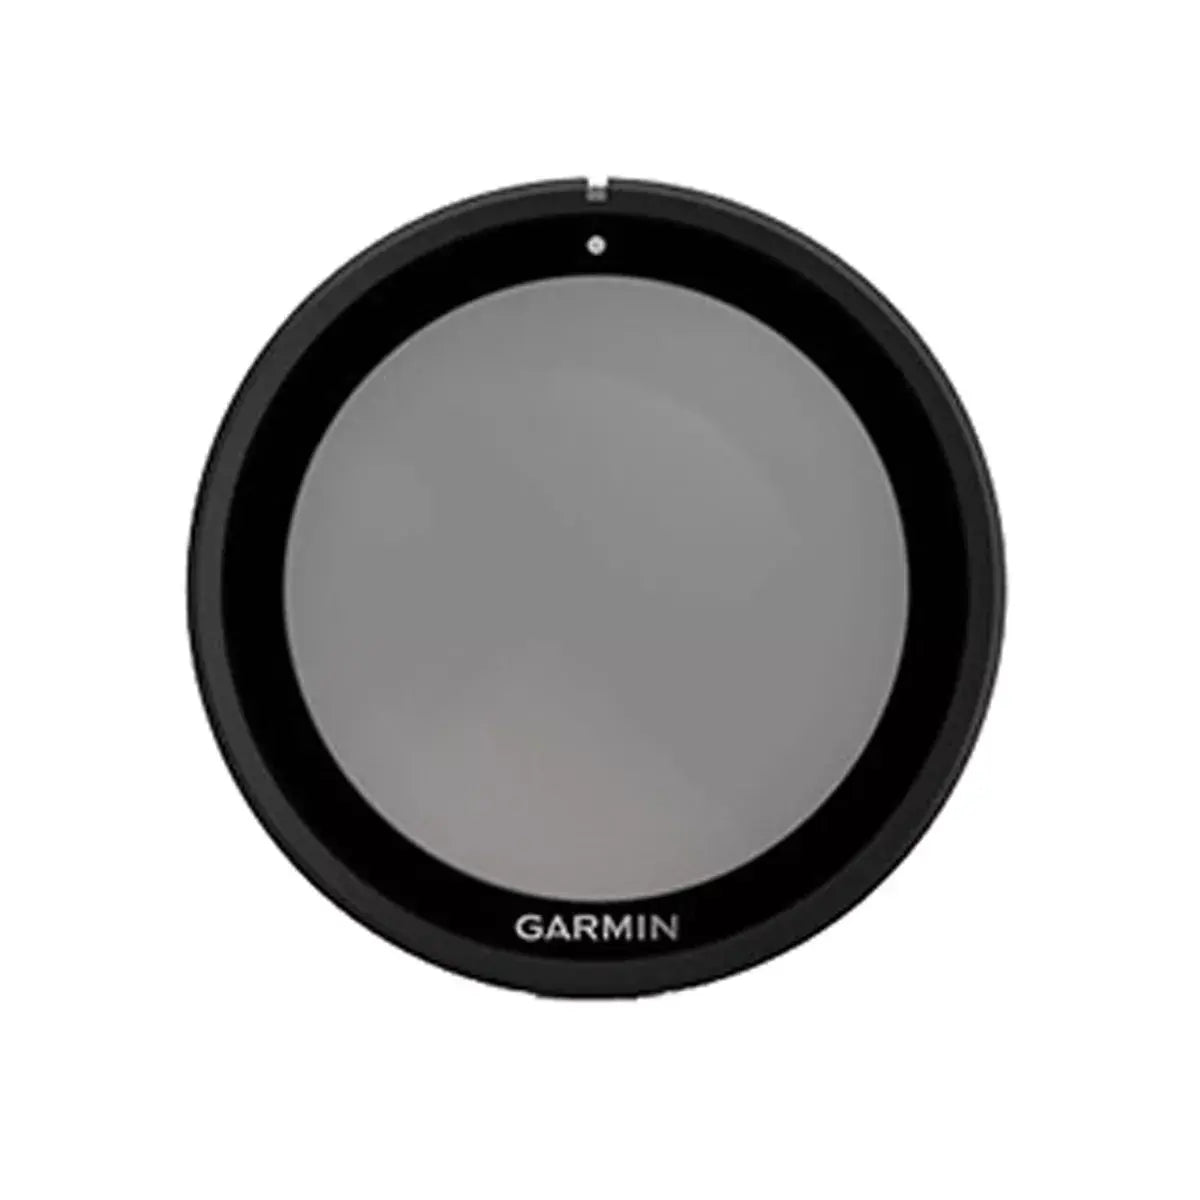 Garmin Polarized Lens Cover - Dongar Technologies LLC